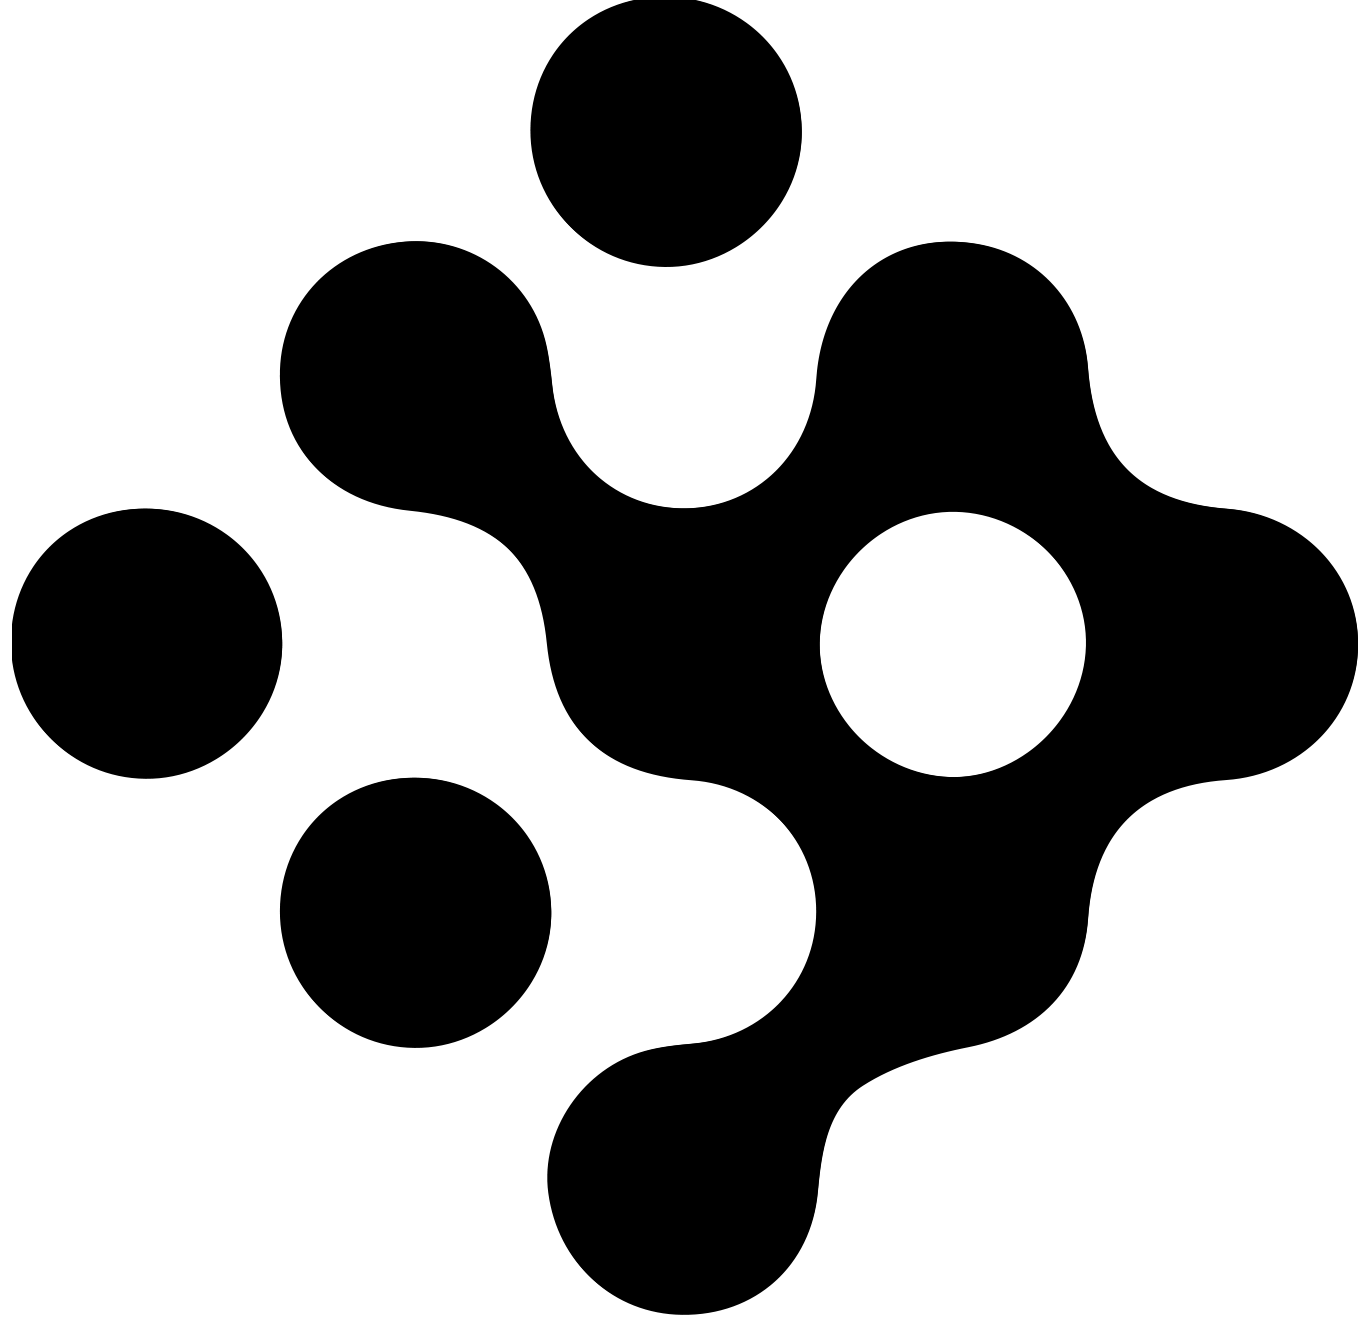 NYUGC logo